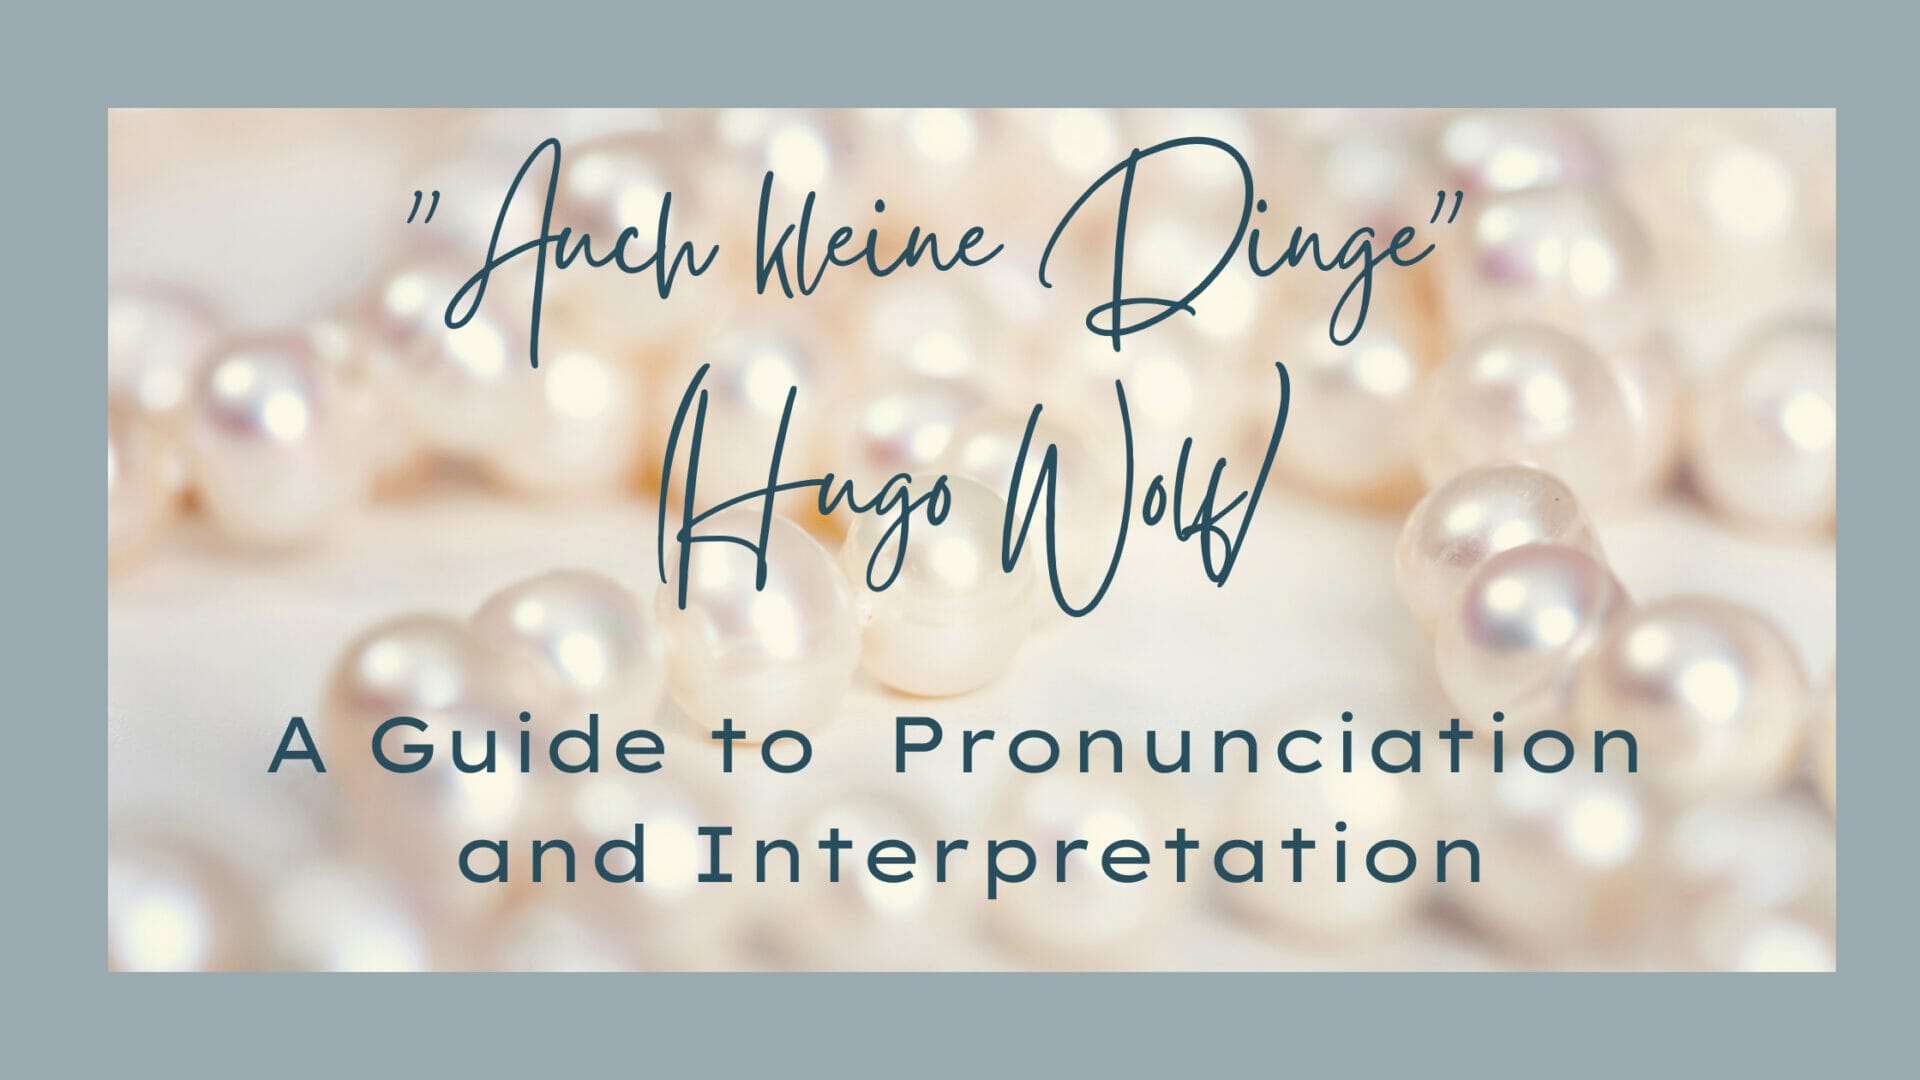 Auch kleine Dinge (Wolf) A Guide to Pronunciation and Interpretation